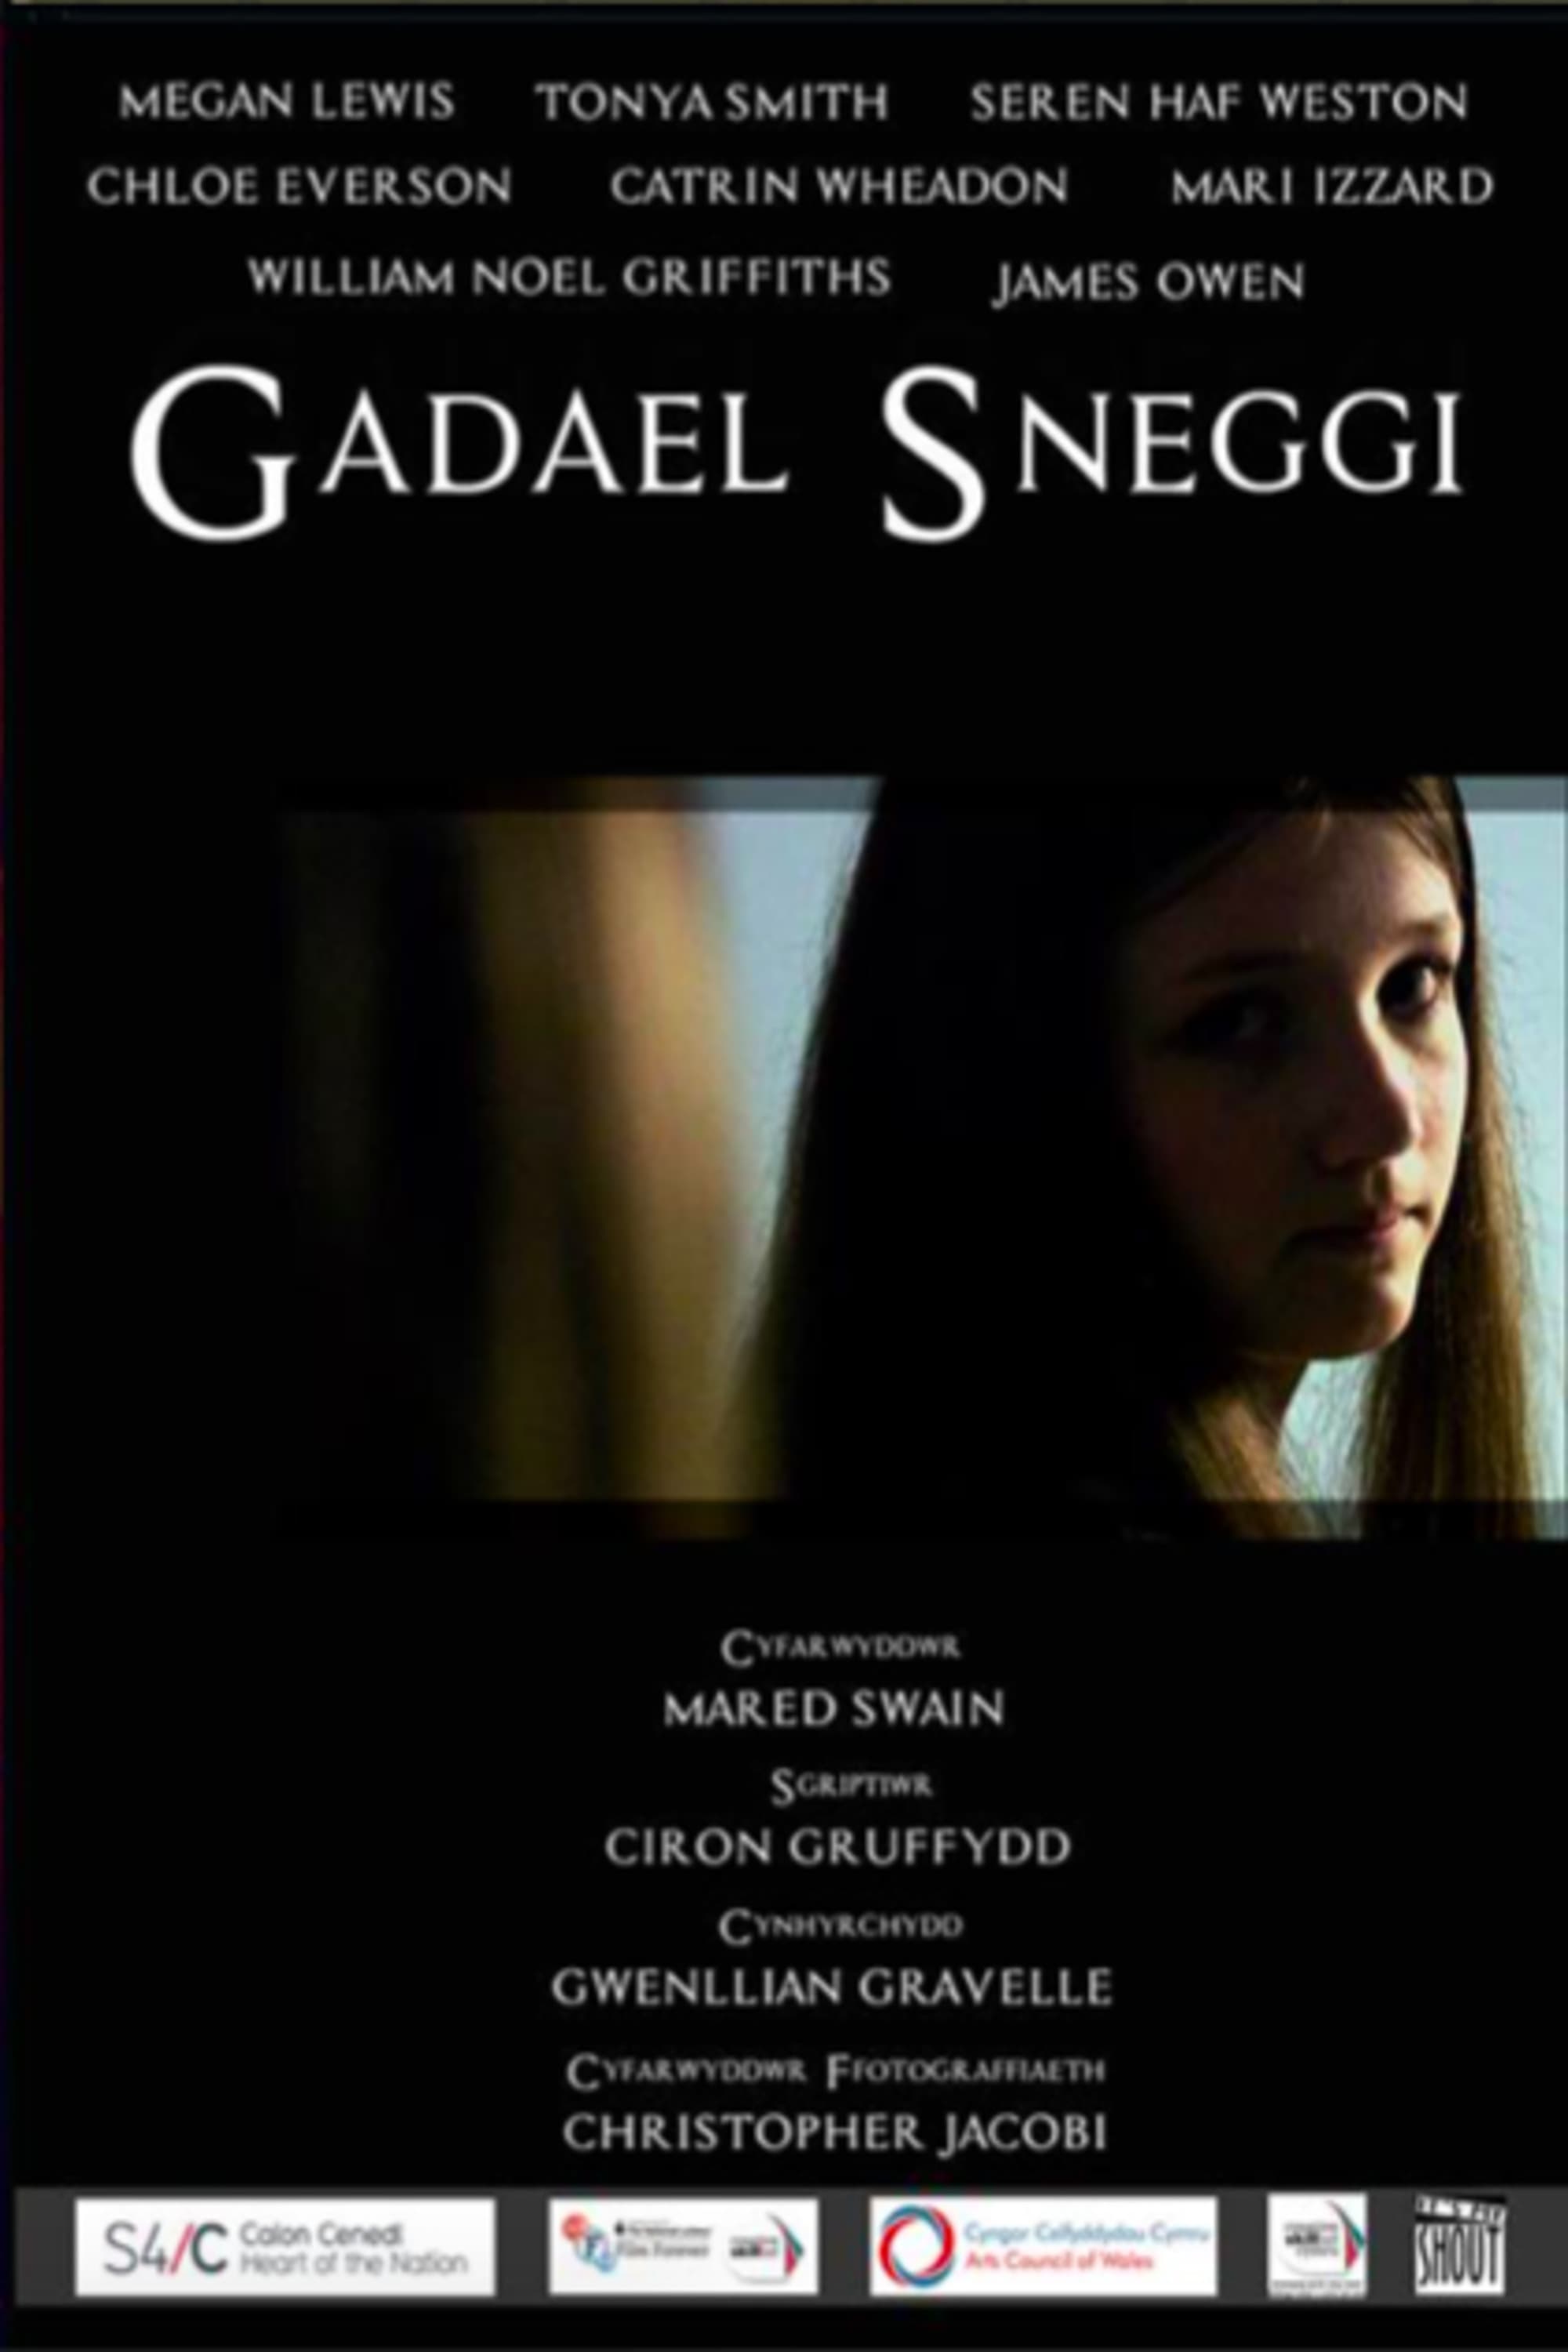 Gadael Sneggi